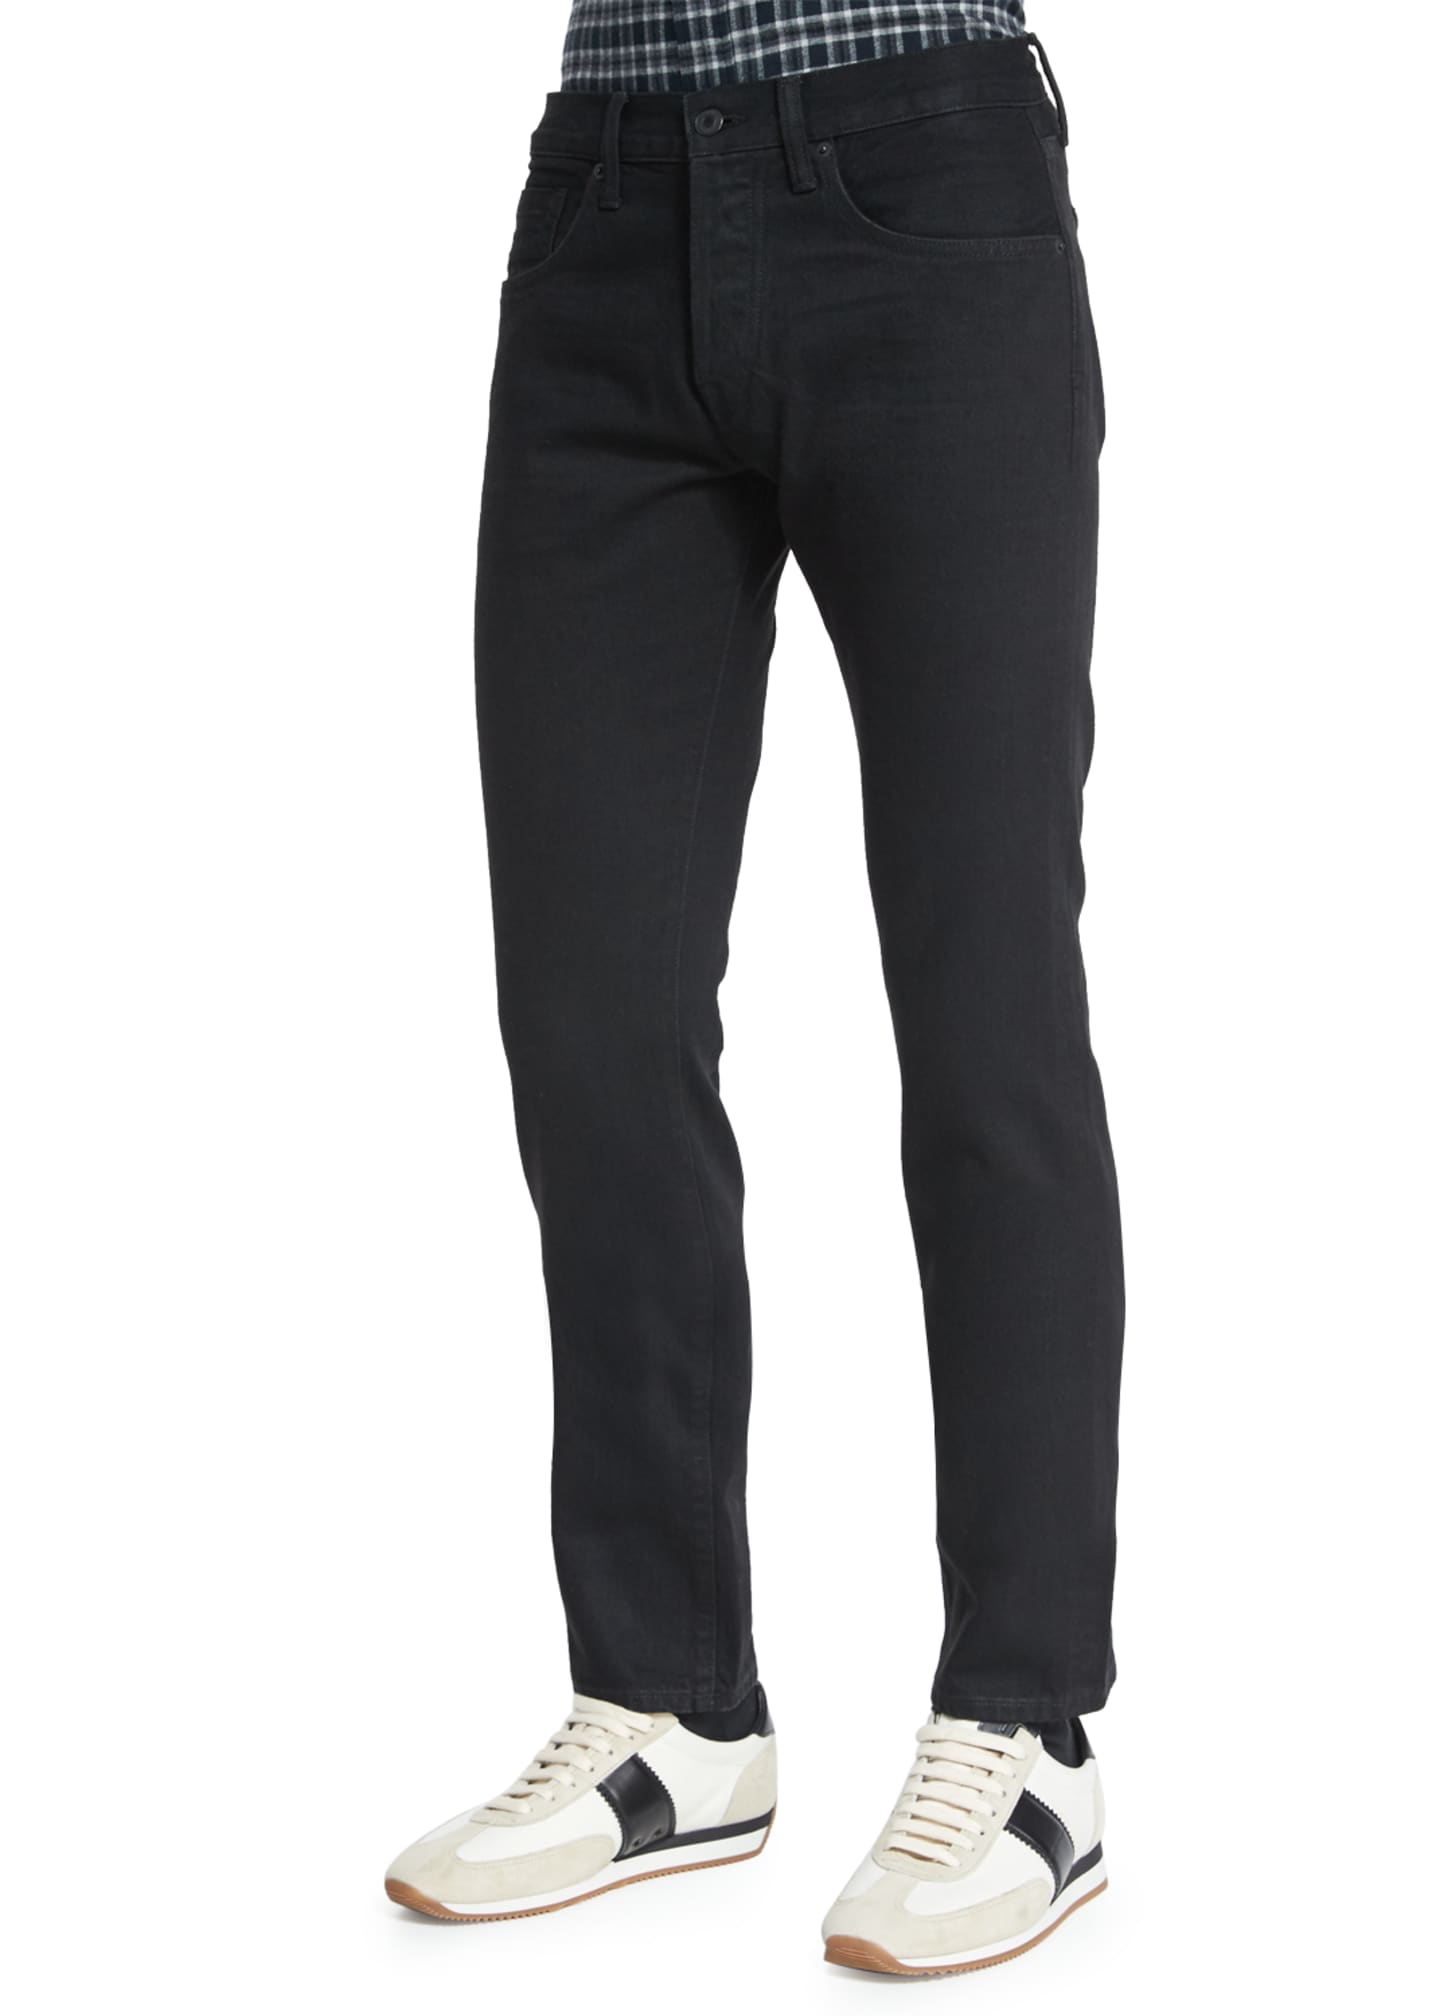 TOM FORD Regular-Fit Resin-Coated Selvedge Jeans, Black - Bergdorf Goodman